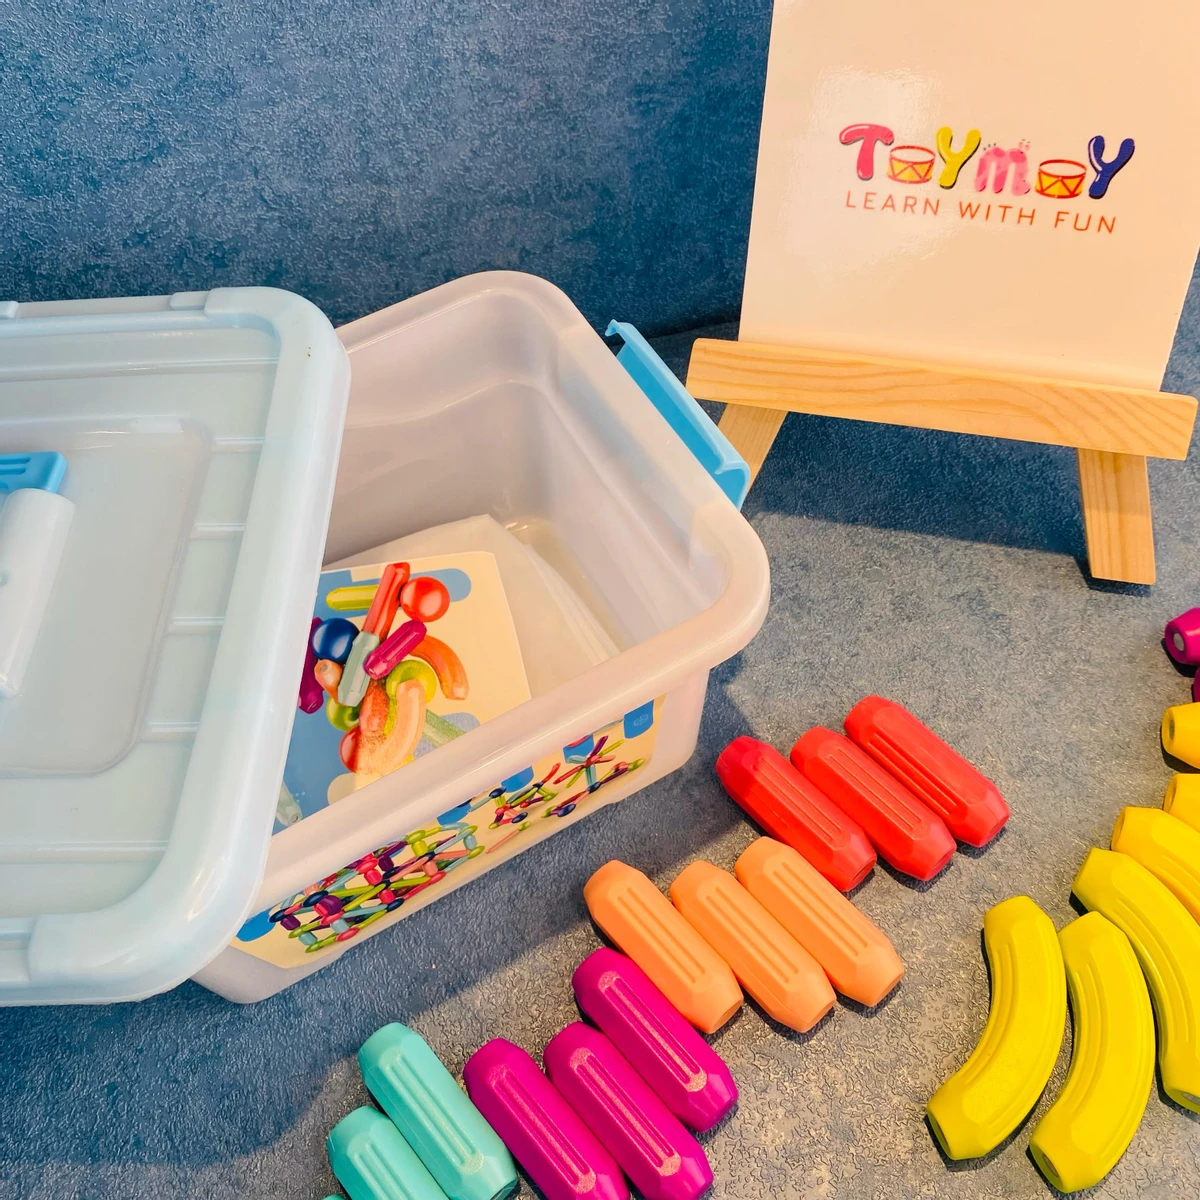 Premium Quality Magnetic Stick STEM educational toys for Kids- 44 pcs